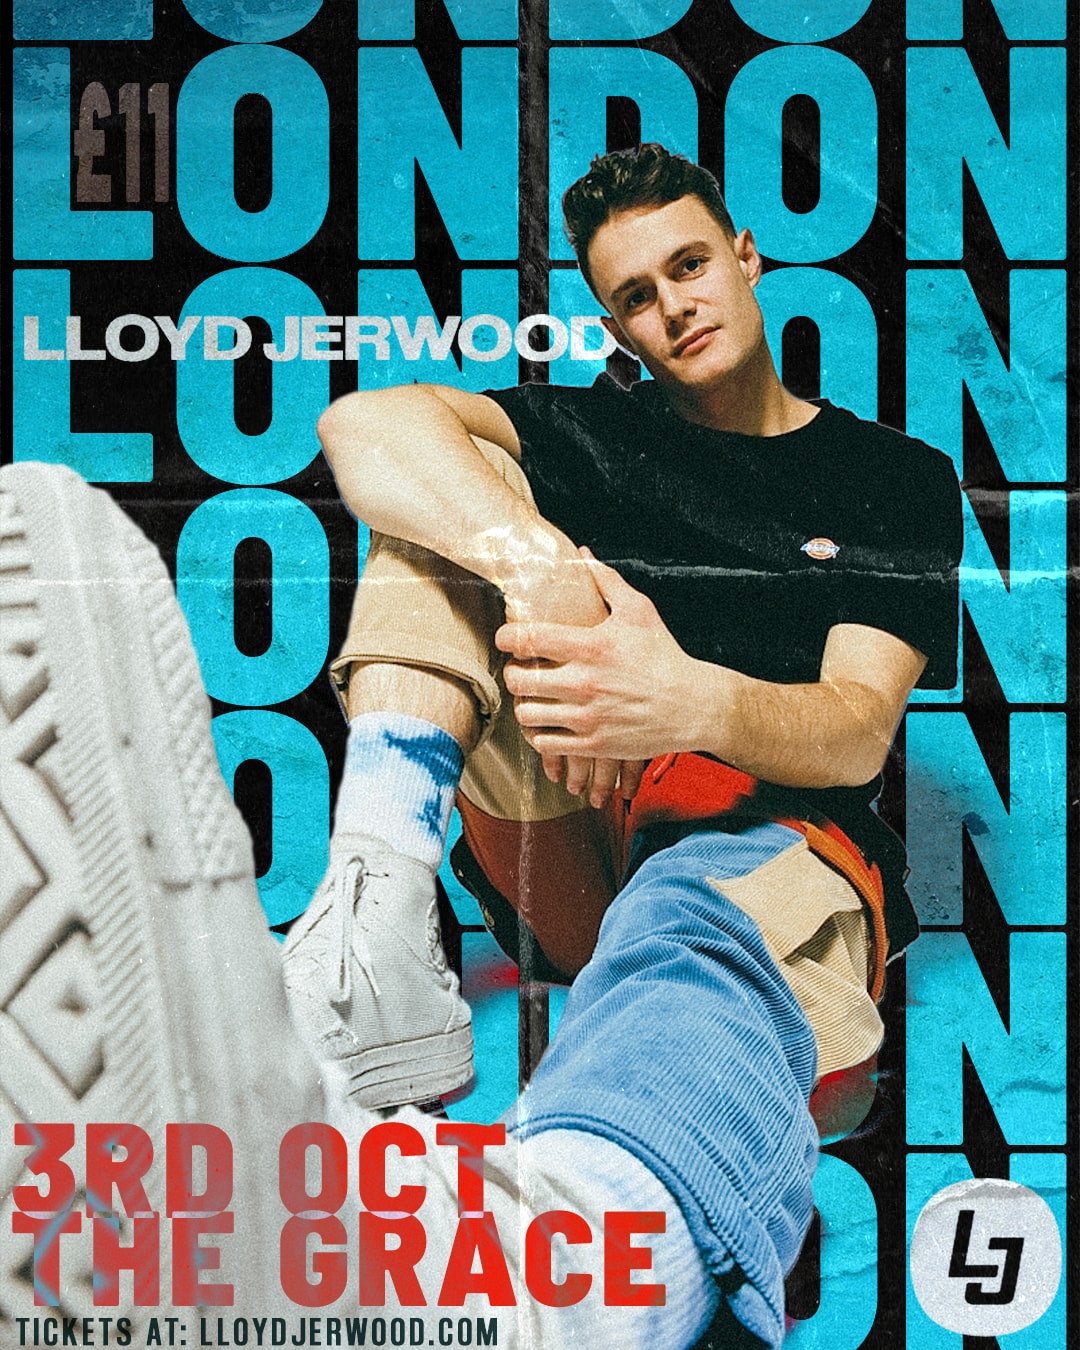 Lloyd Jerwood Poster